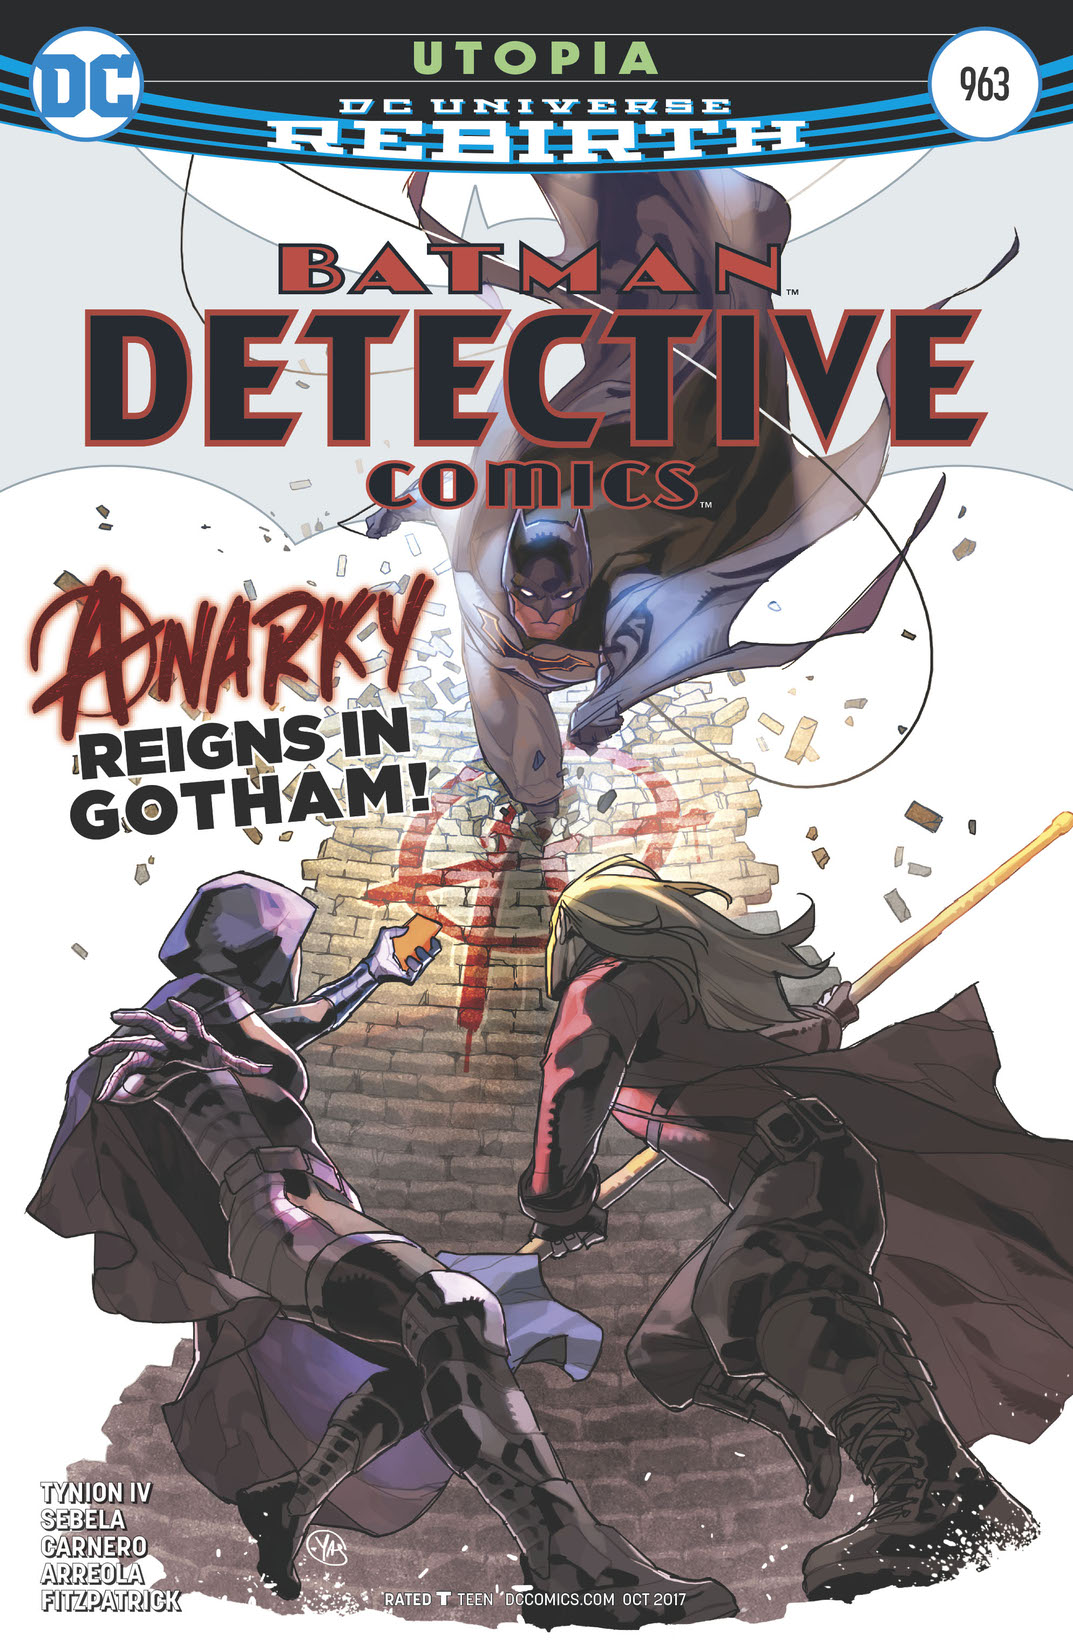 Detective Comics (2016-) #963 preview images